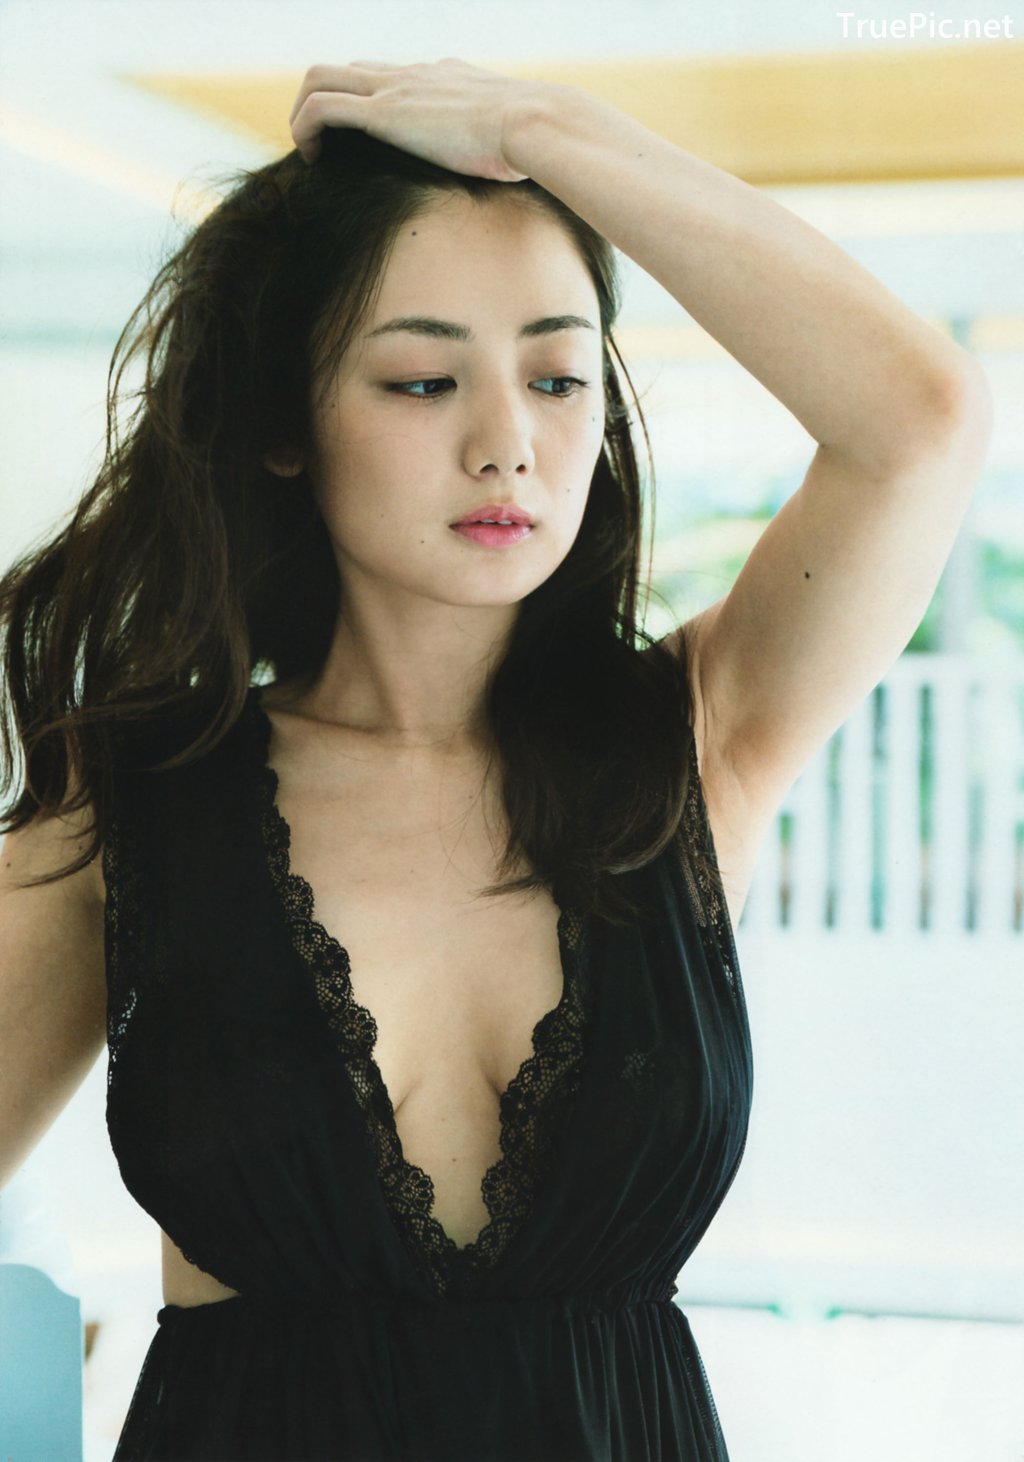 Image-Japanese-Actress-Gravure-Idol-Moemi-Katayama-Mermaid-From-Tokyo-Japan-TruePic.net- Picture-12